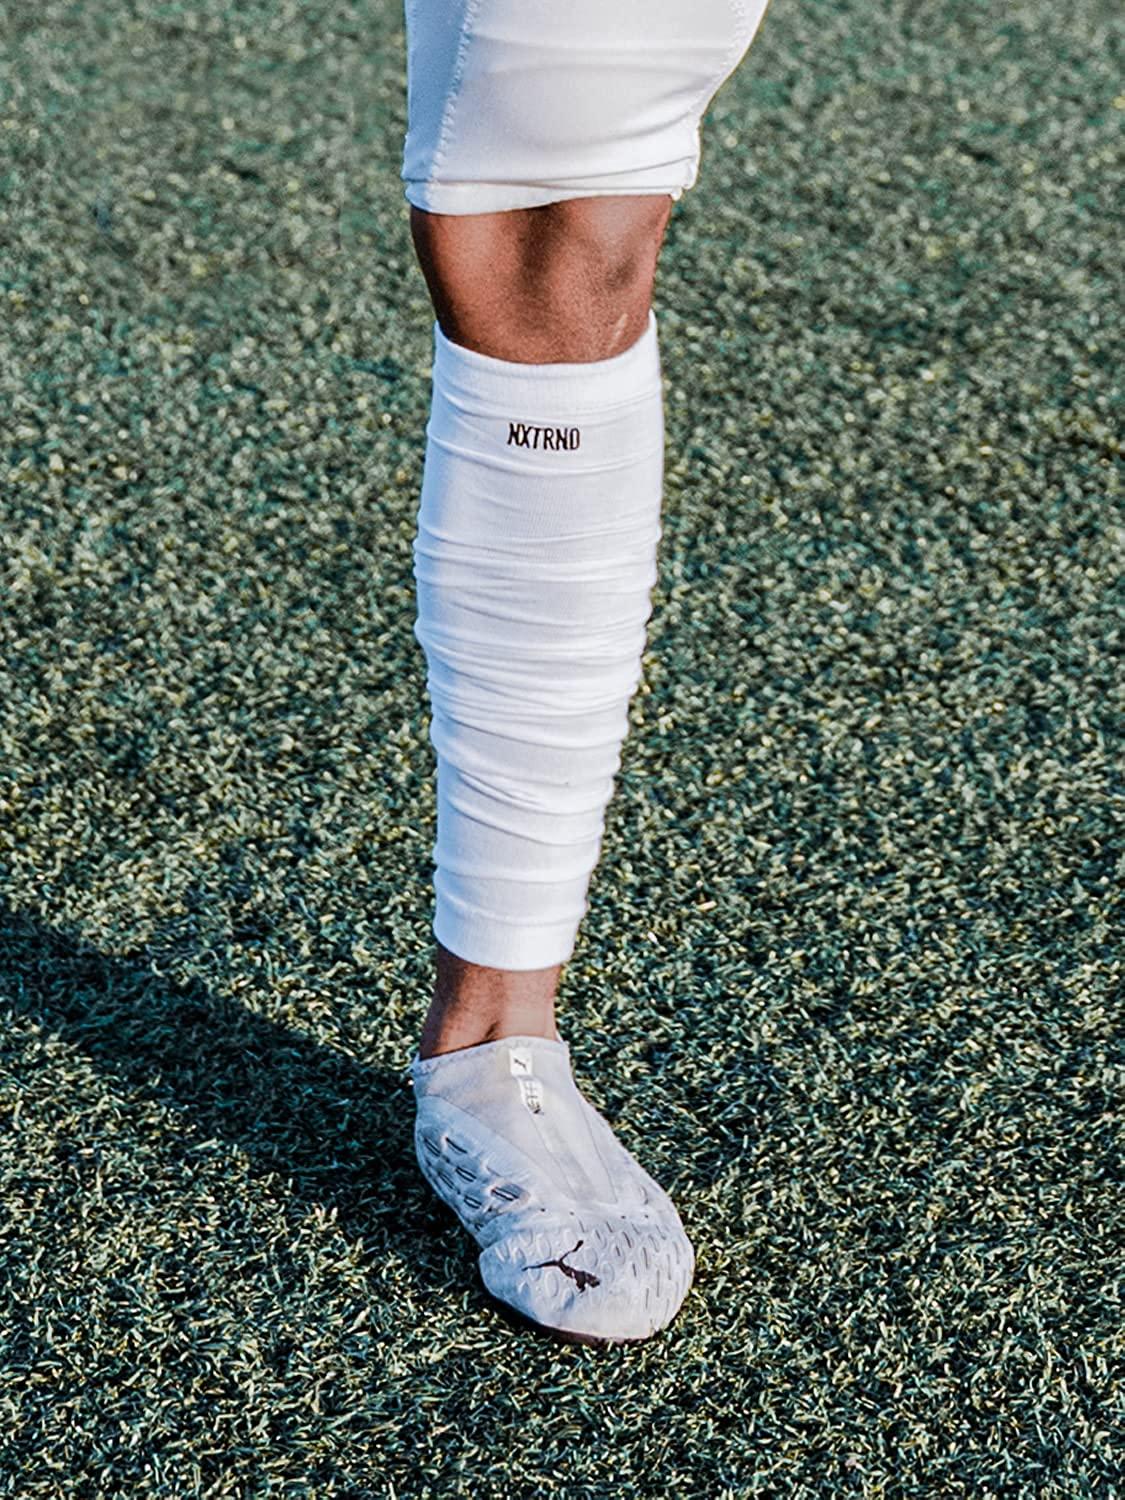  Nxtrnd Football Leg Sleeves, Calf Sleeves For Men & Boys,  Sold As A Pair